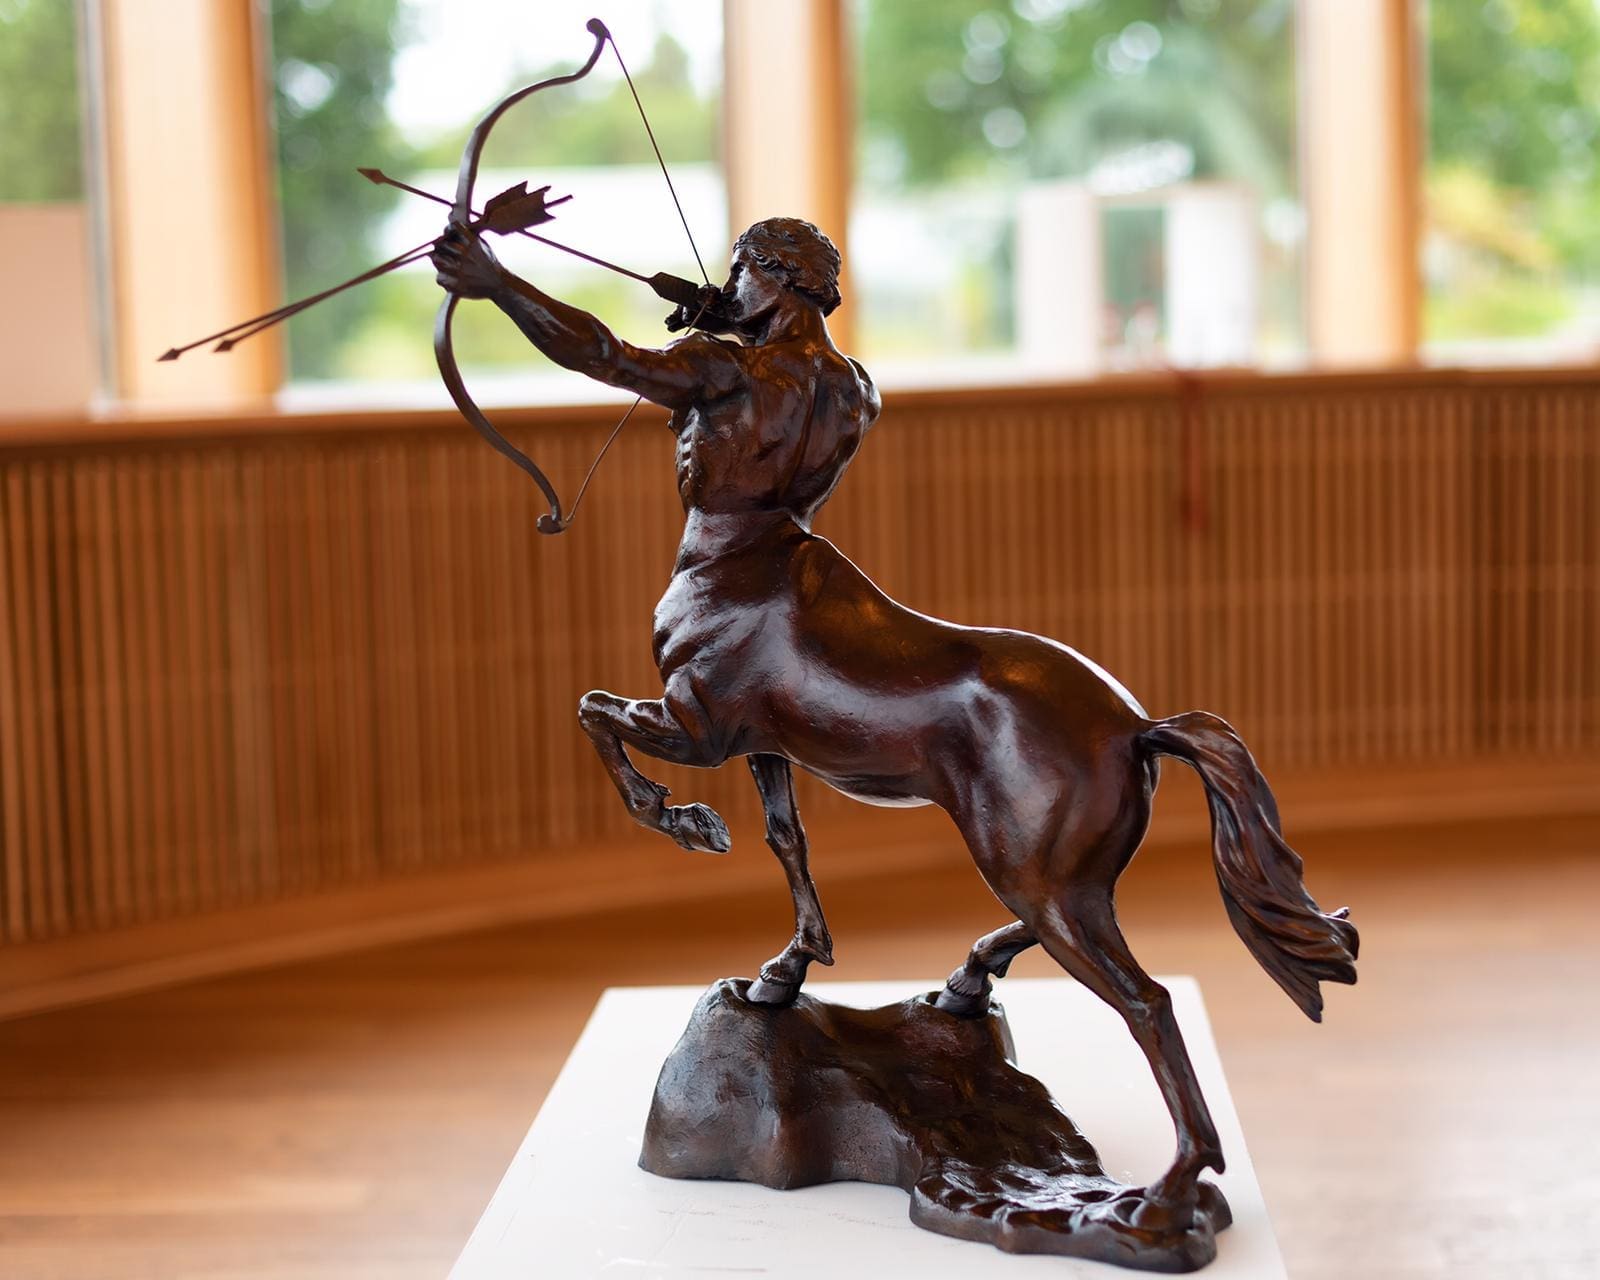 The Archer - Bronze Centaur Sculpture by Michael C Keane Dublin Ireland rear view